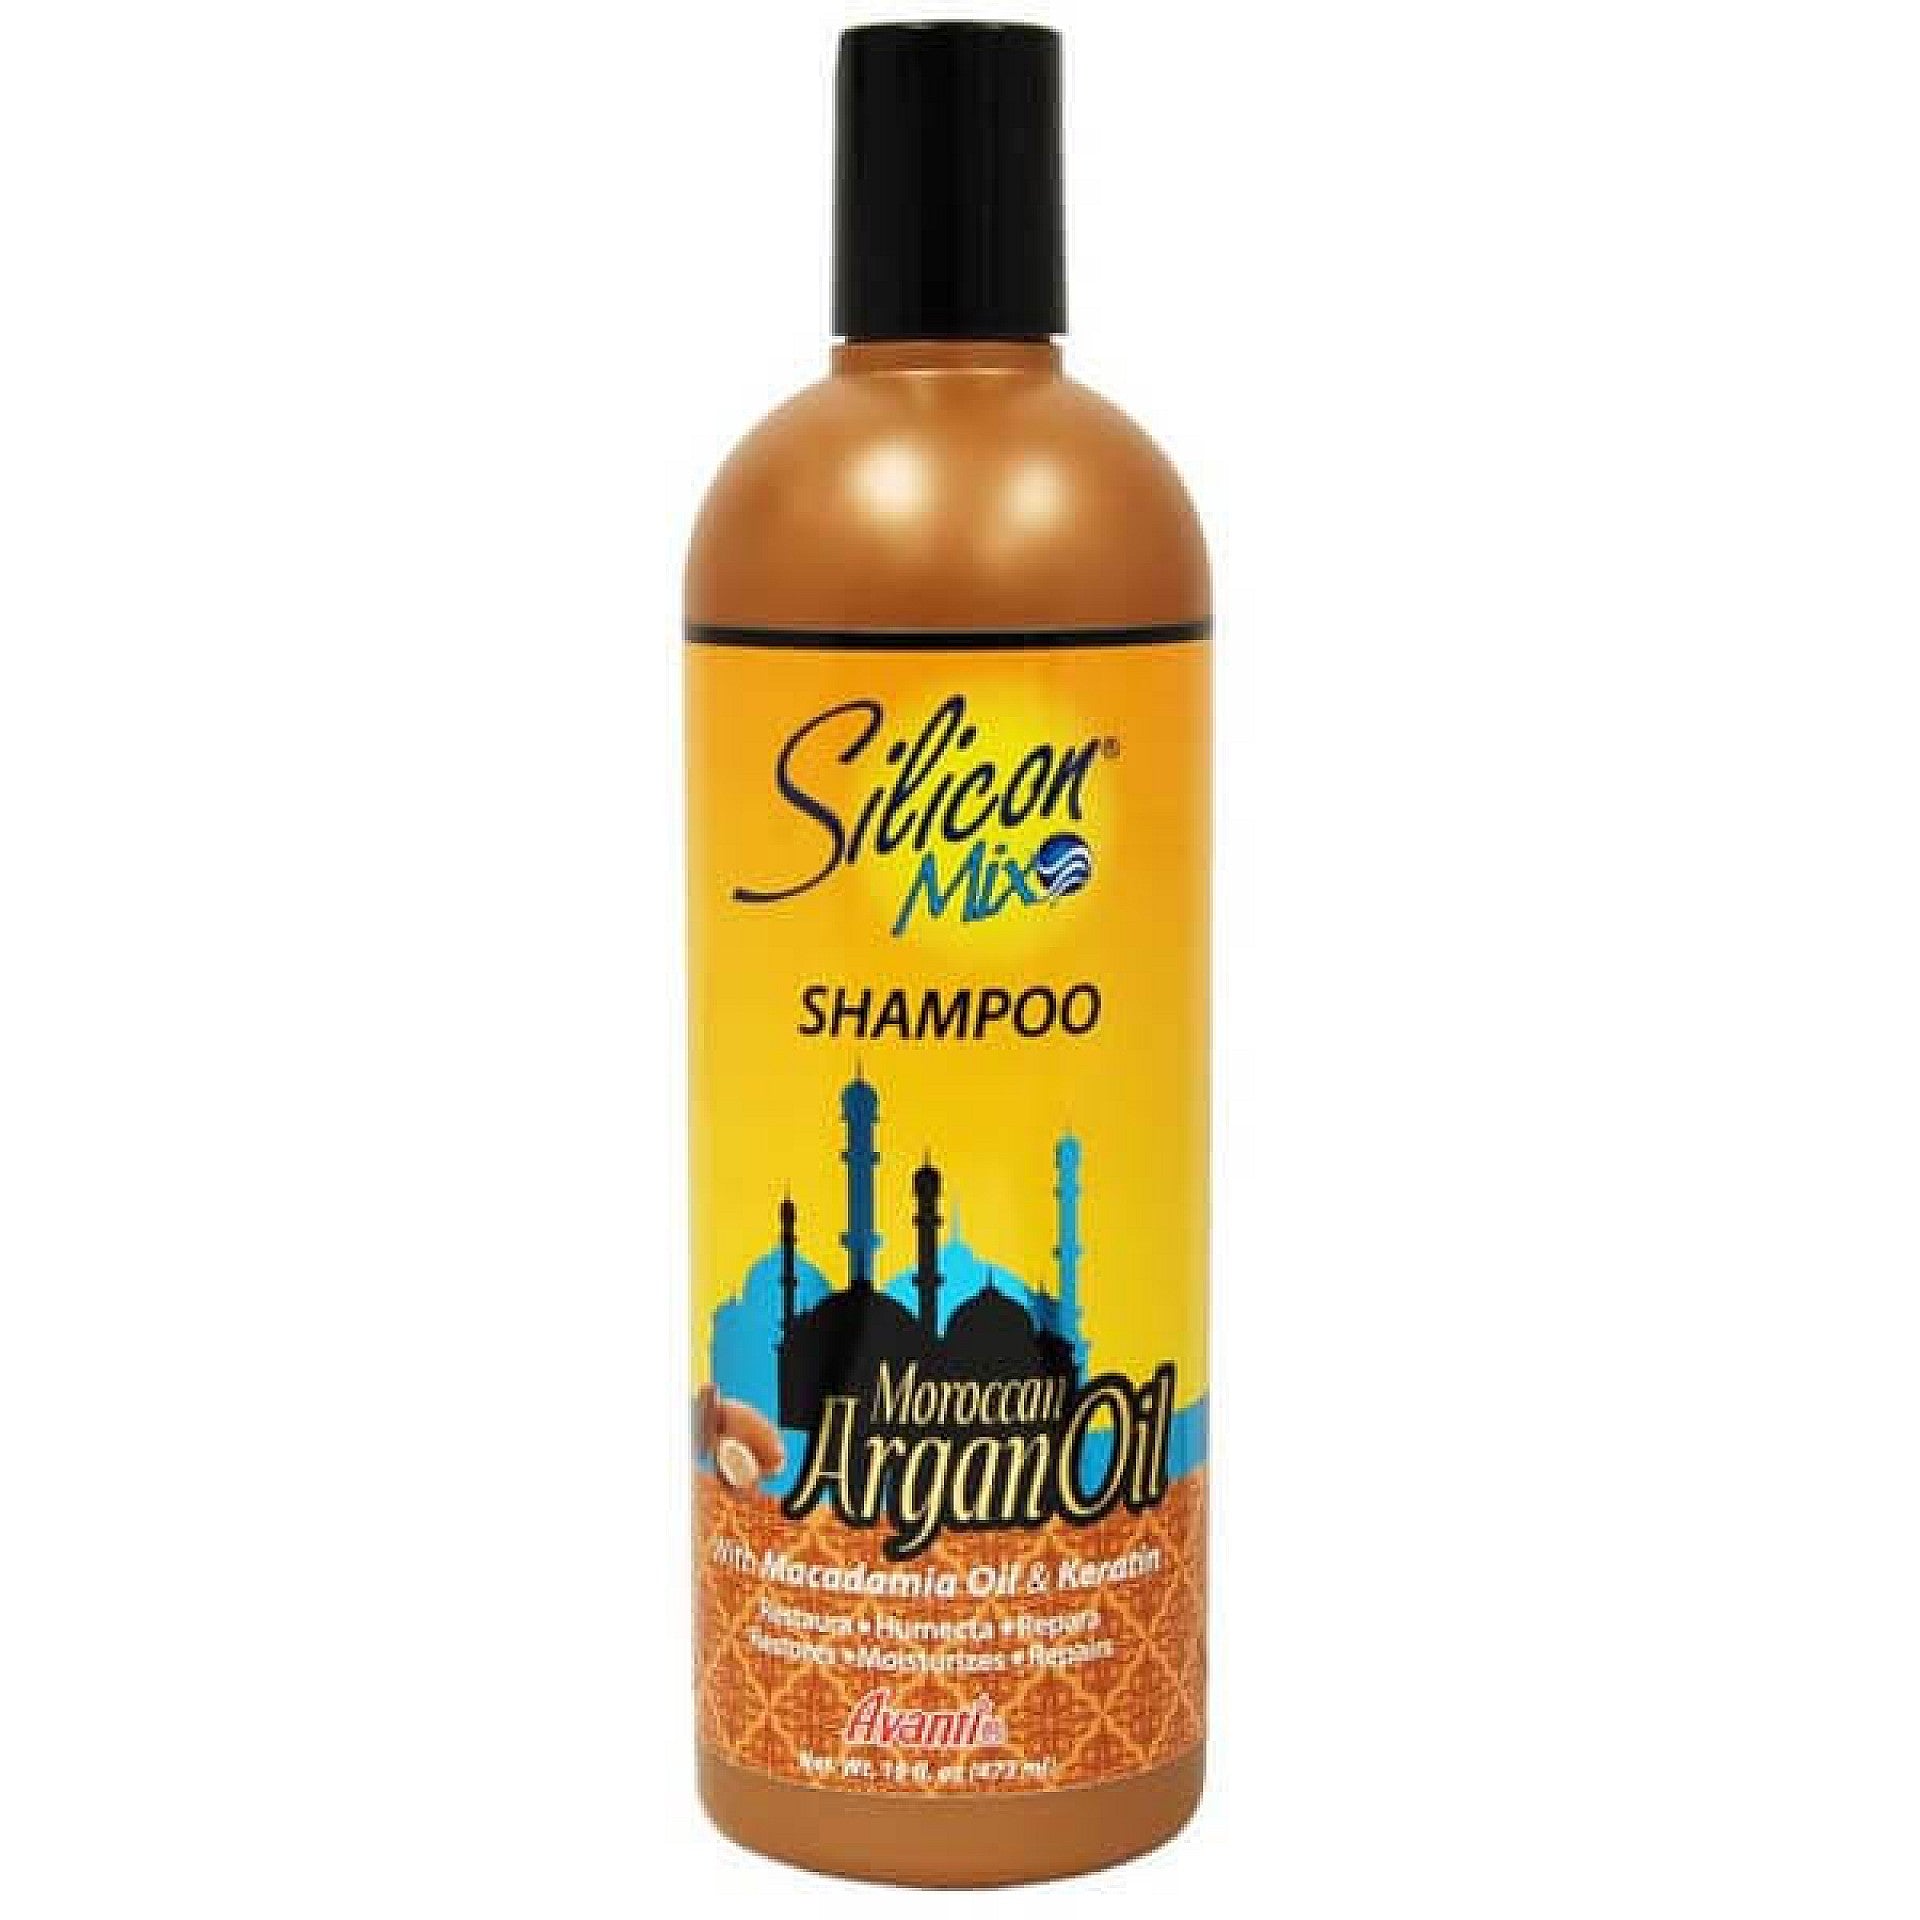 Silicon Mix Moroccan Argan Oil Shampoo 16 Fl.oz